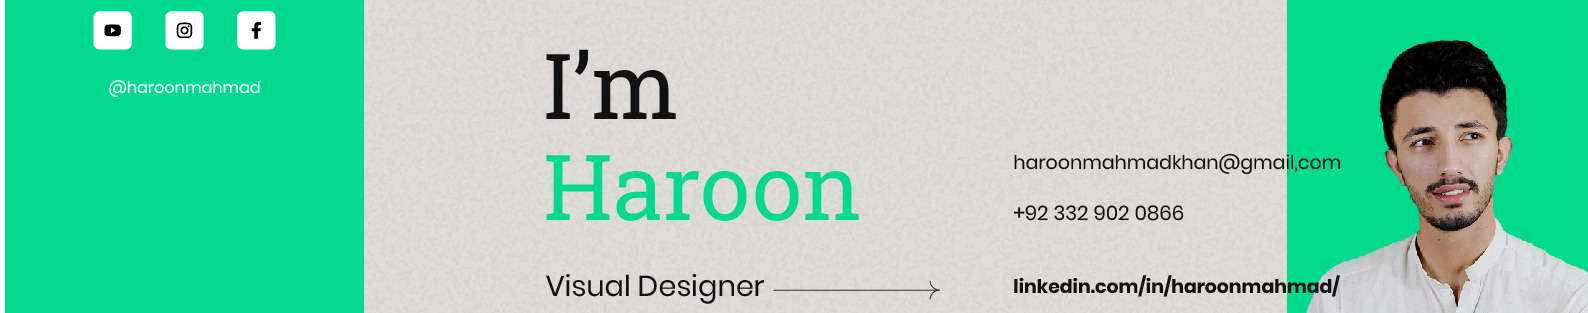 Muhammad Haroon's profile banner